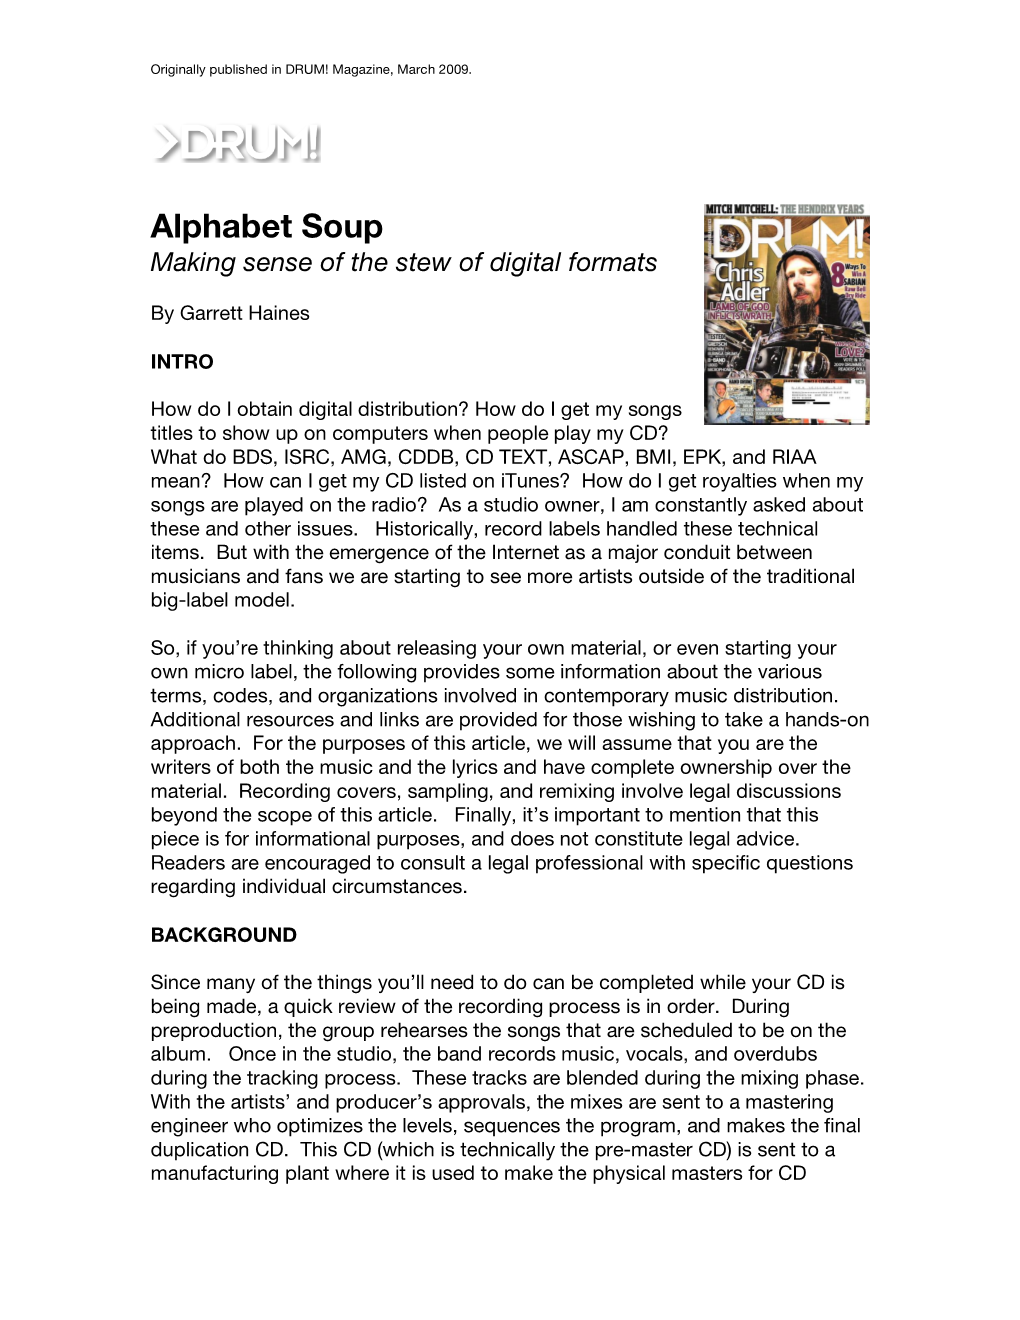 Alphabet Soup Making Sense of the Stew of Digital Formats